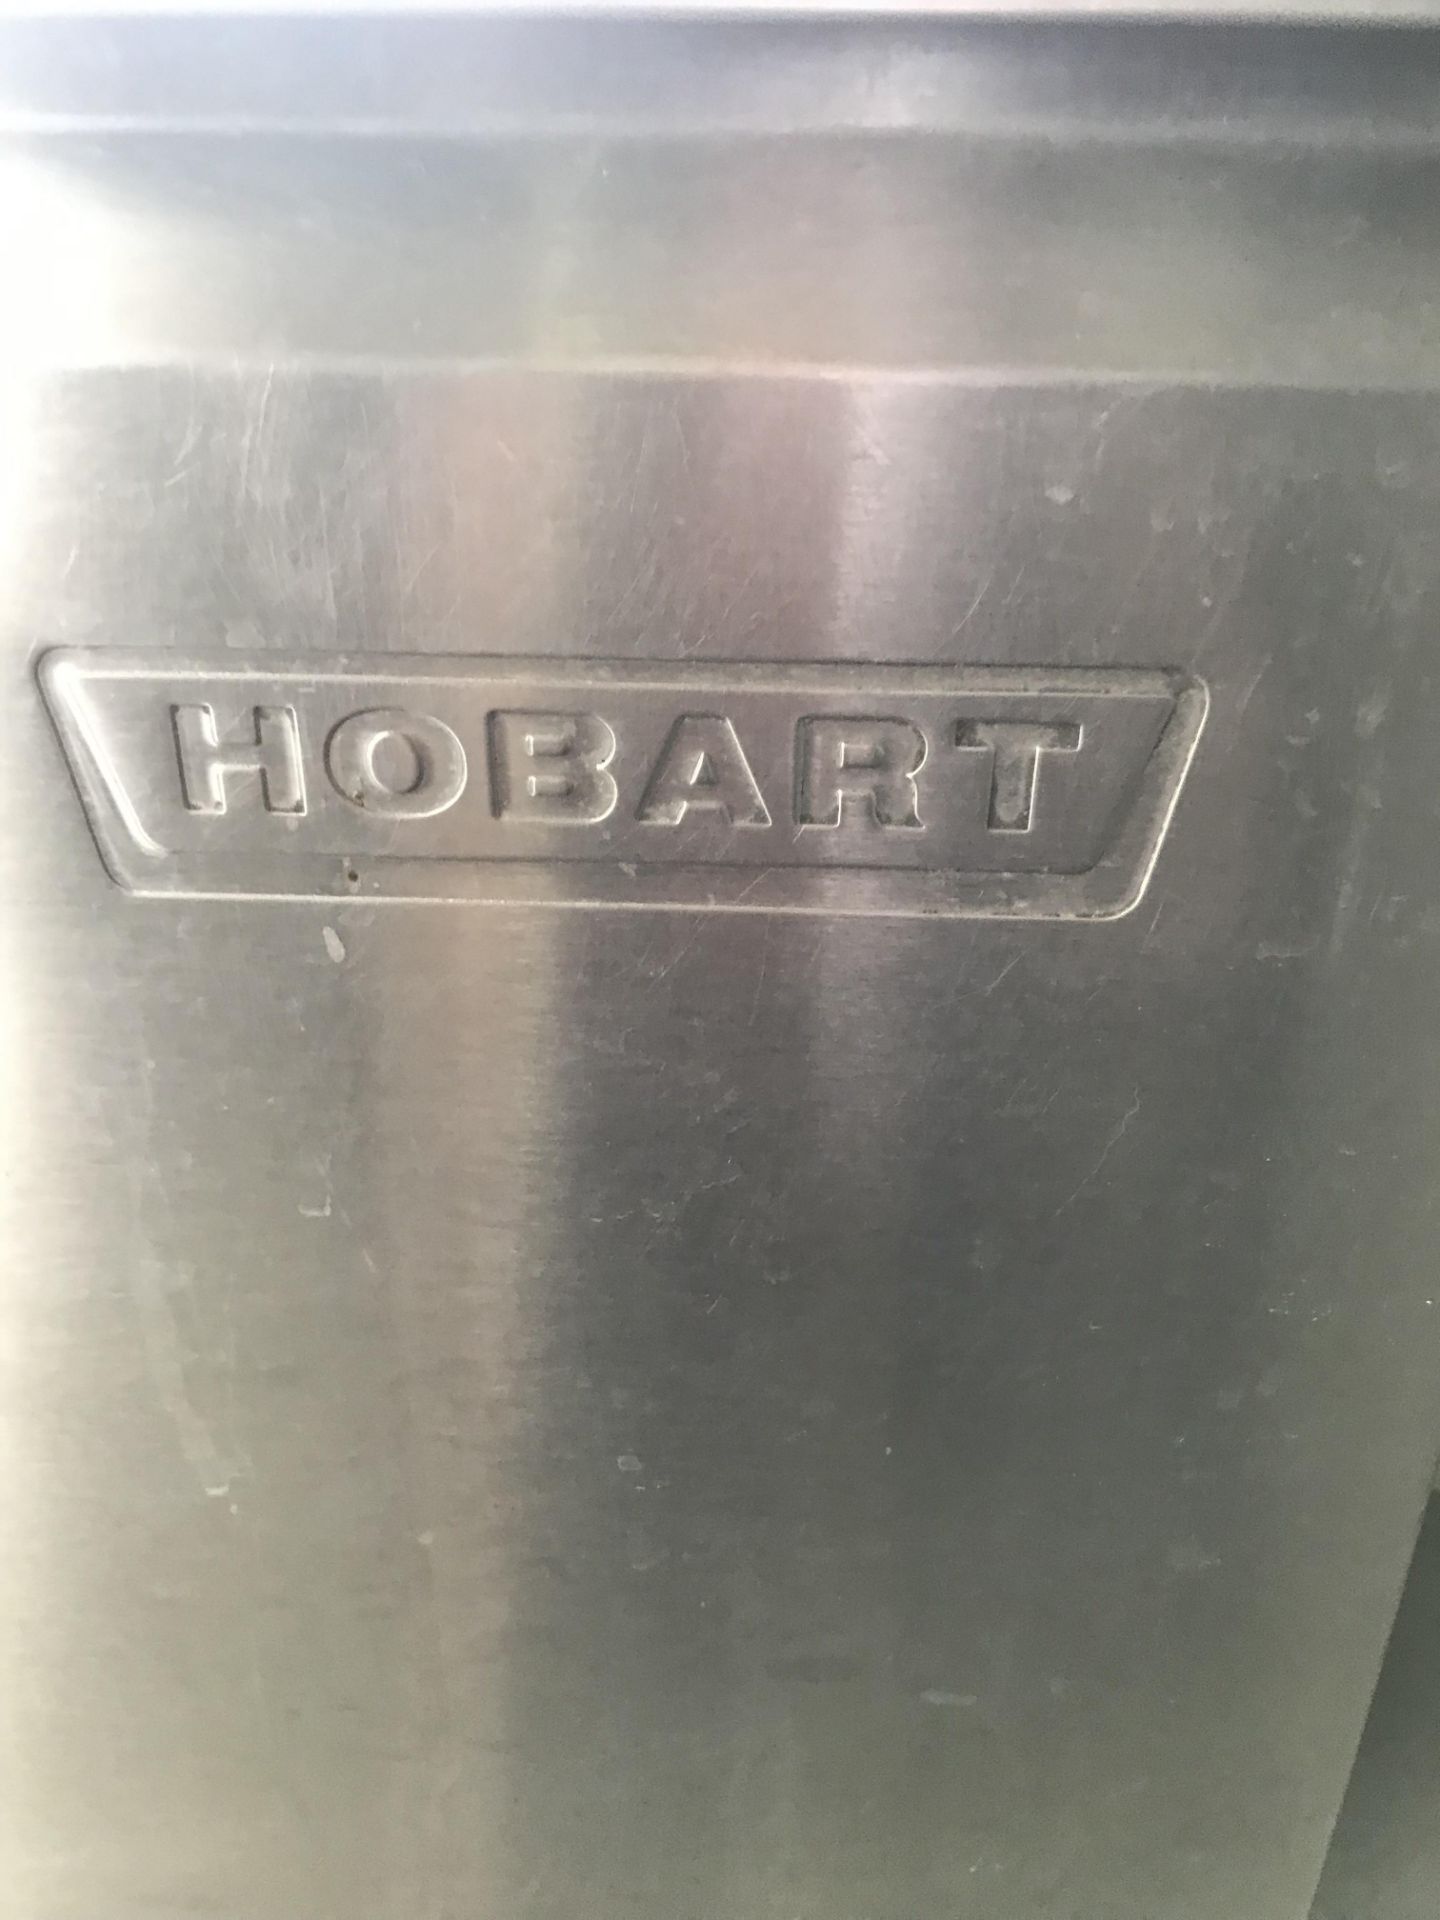 Hobart EF40 Stainless Steel Commercial Dishwasher - Image 2 of 5